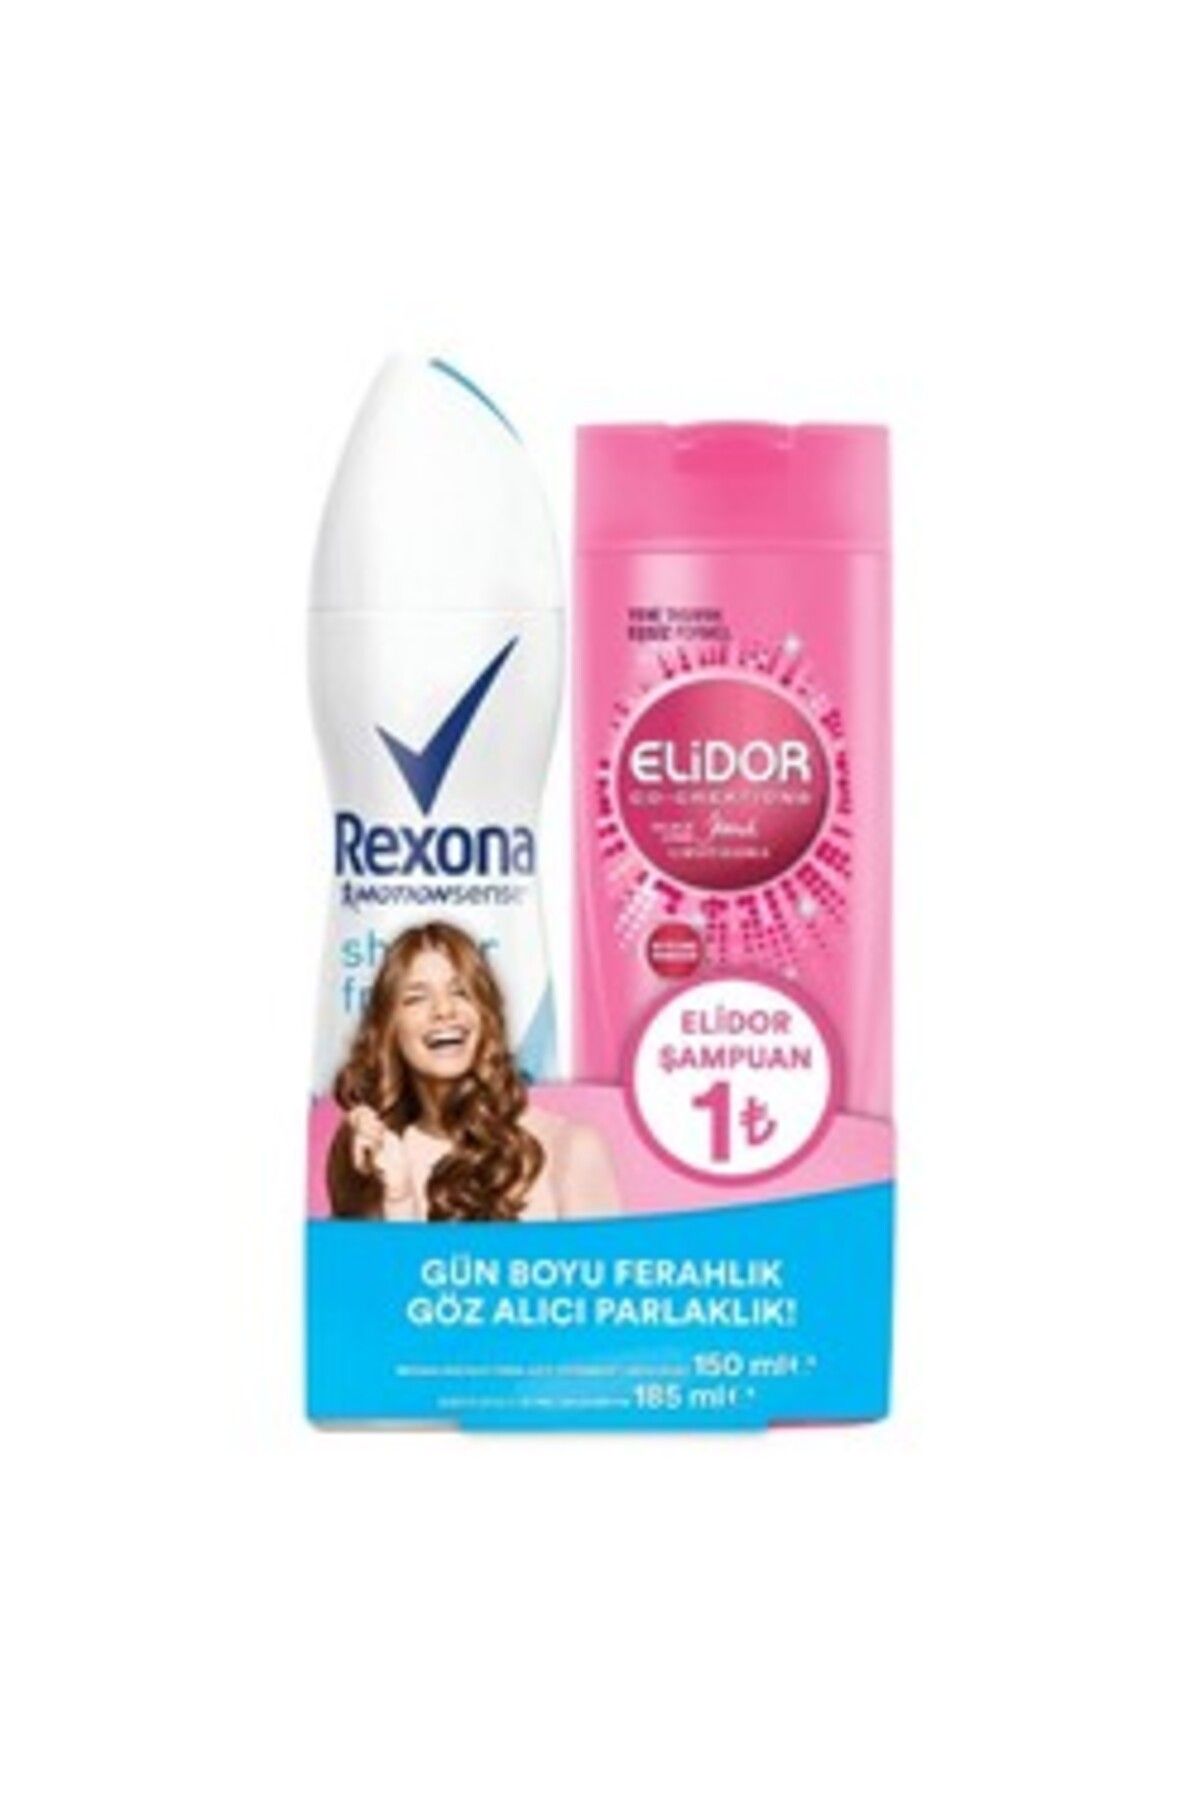 Rexona ( KÜÇÜK ESANS ) Rexona Kadın Deodorant 150 Ml + Elidor Şampuan 185 Ml Set ( 1 ADET )